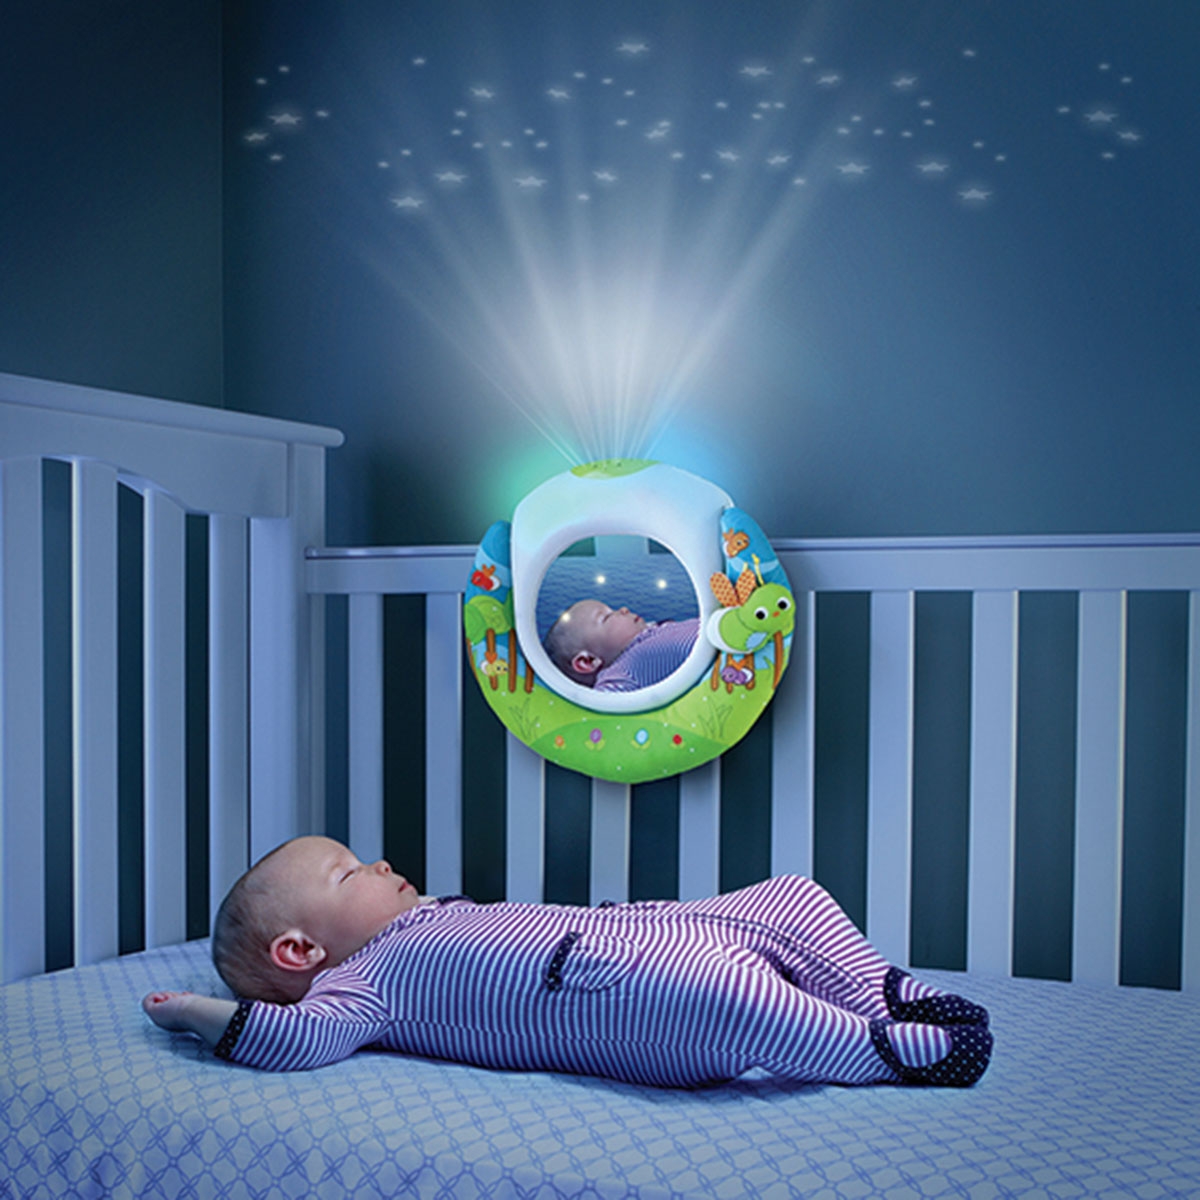 Permalink to Nursery Ceiling Projector Lights